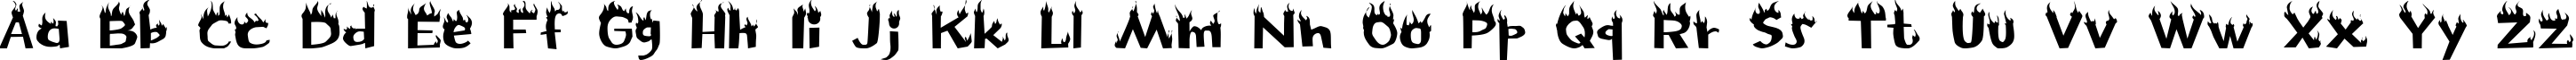 Пример написания английского алфавита шрифтом Flame